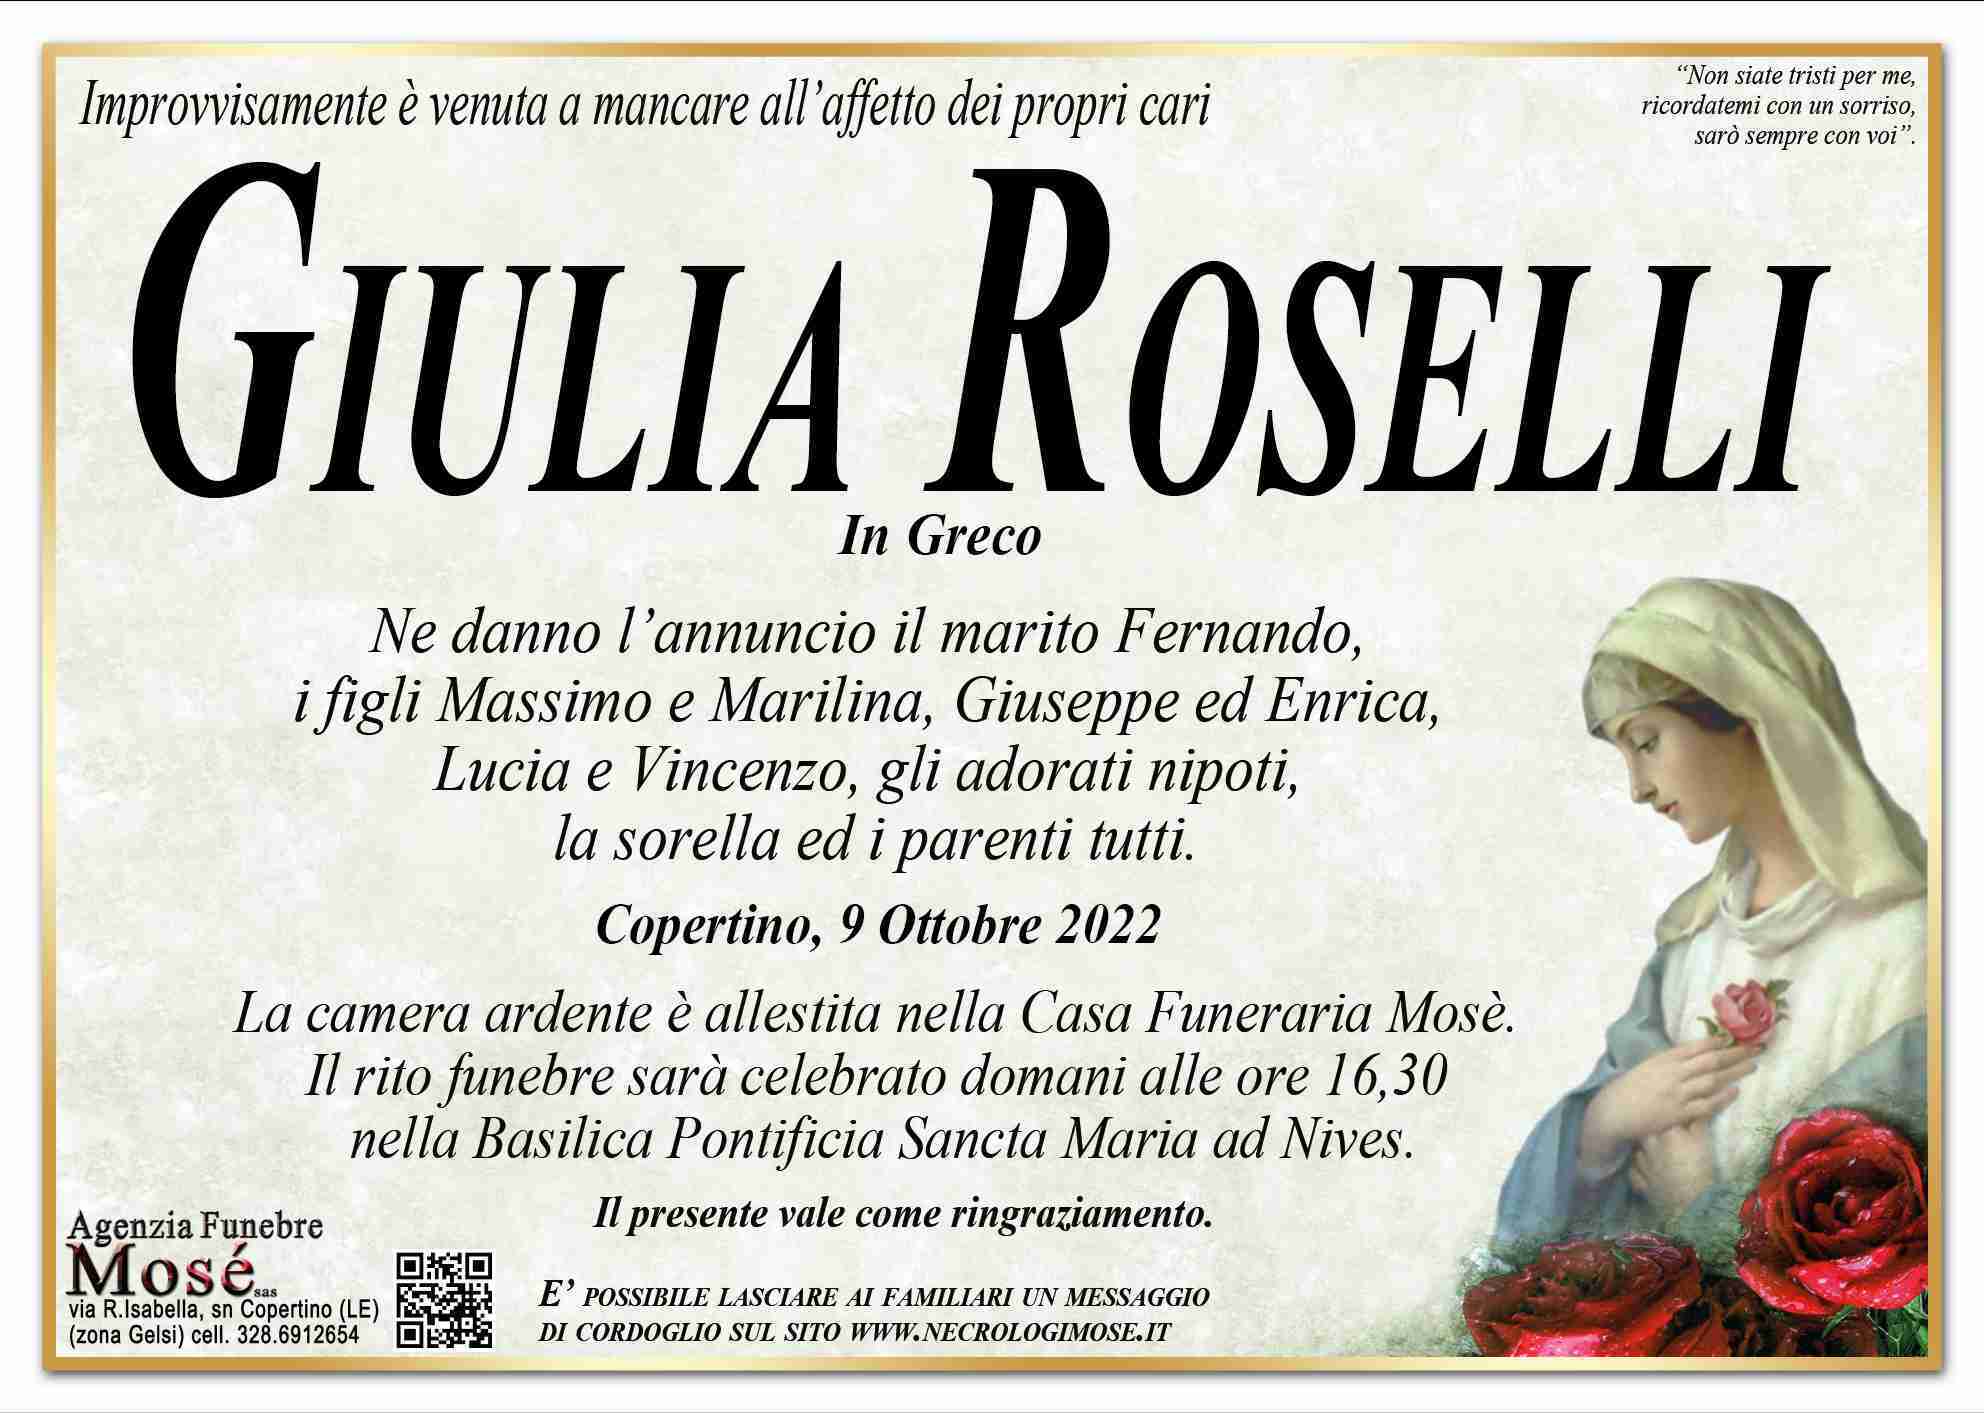 Giulia Roselli